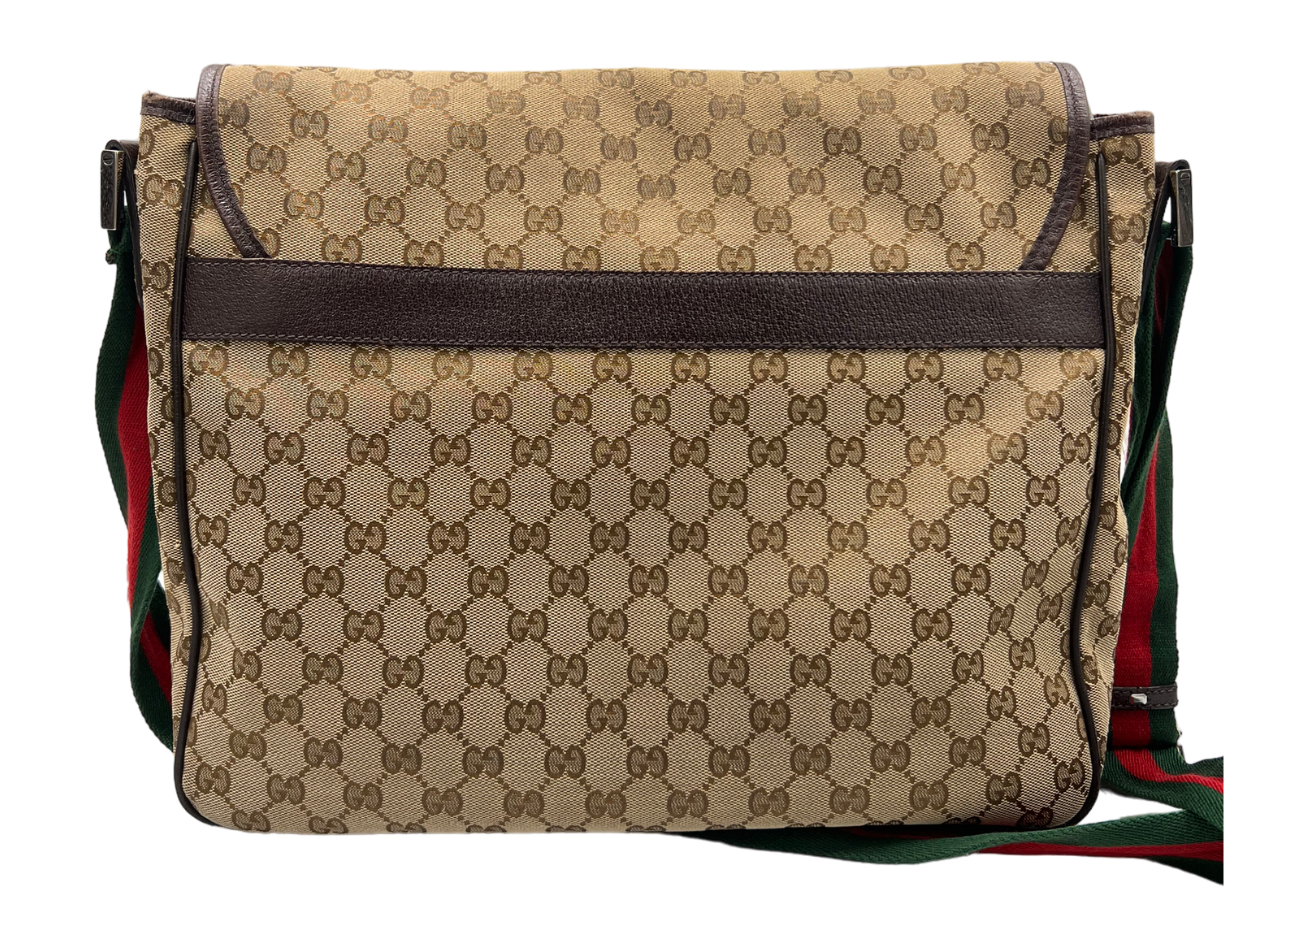 Gucci Messenger Bag COND 9/10